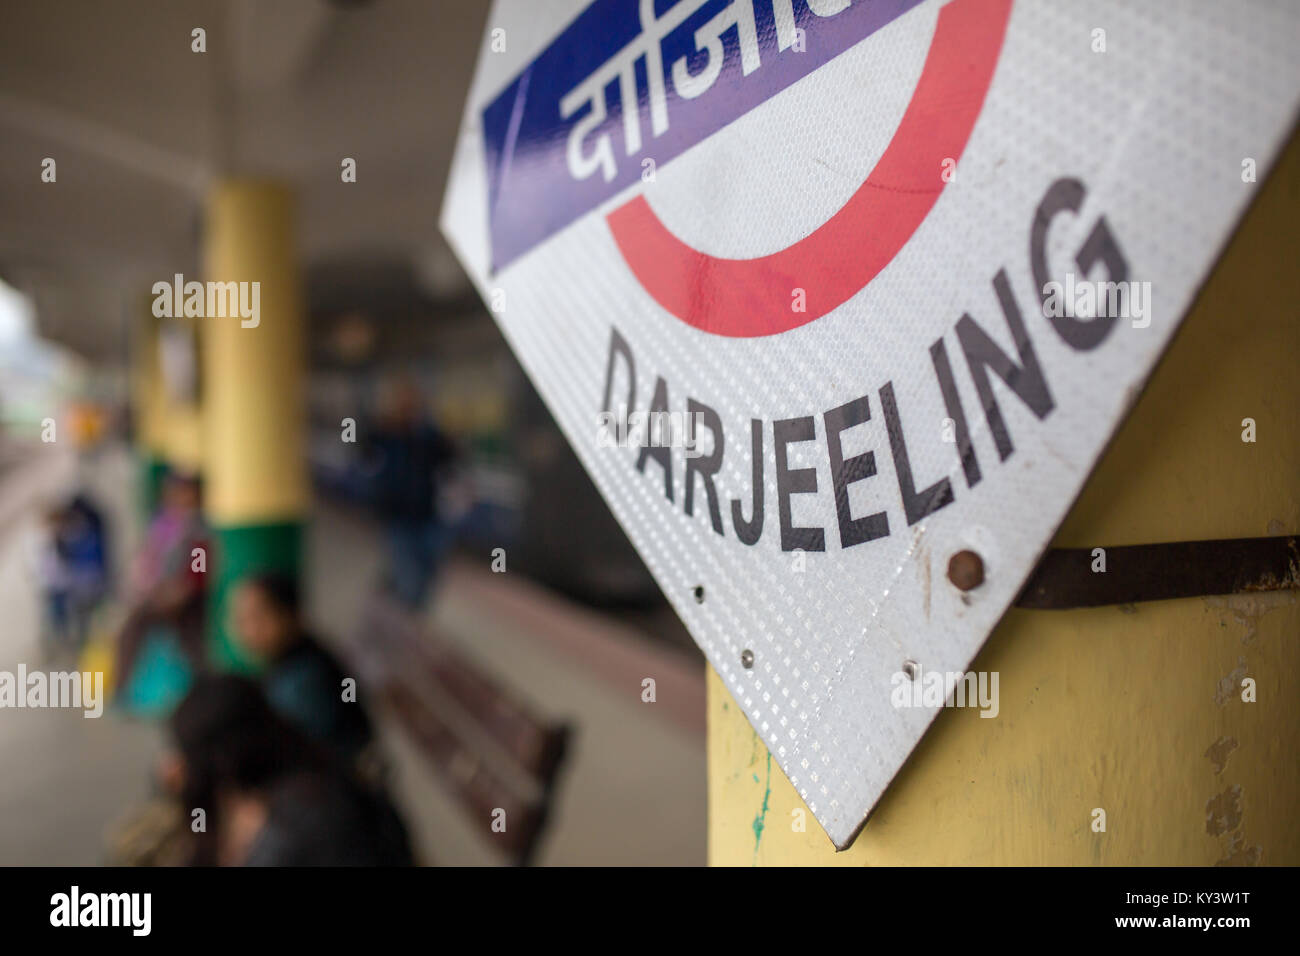 Darjeeling railway station sign in Darjeeling, India Stock Photo